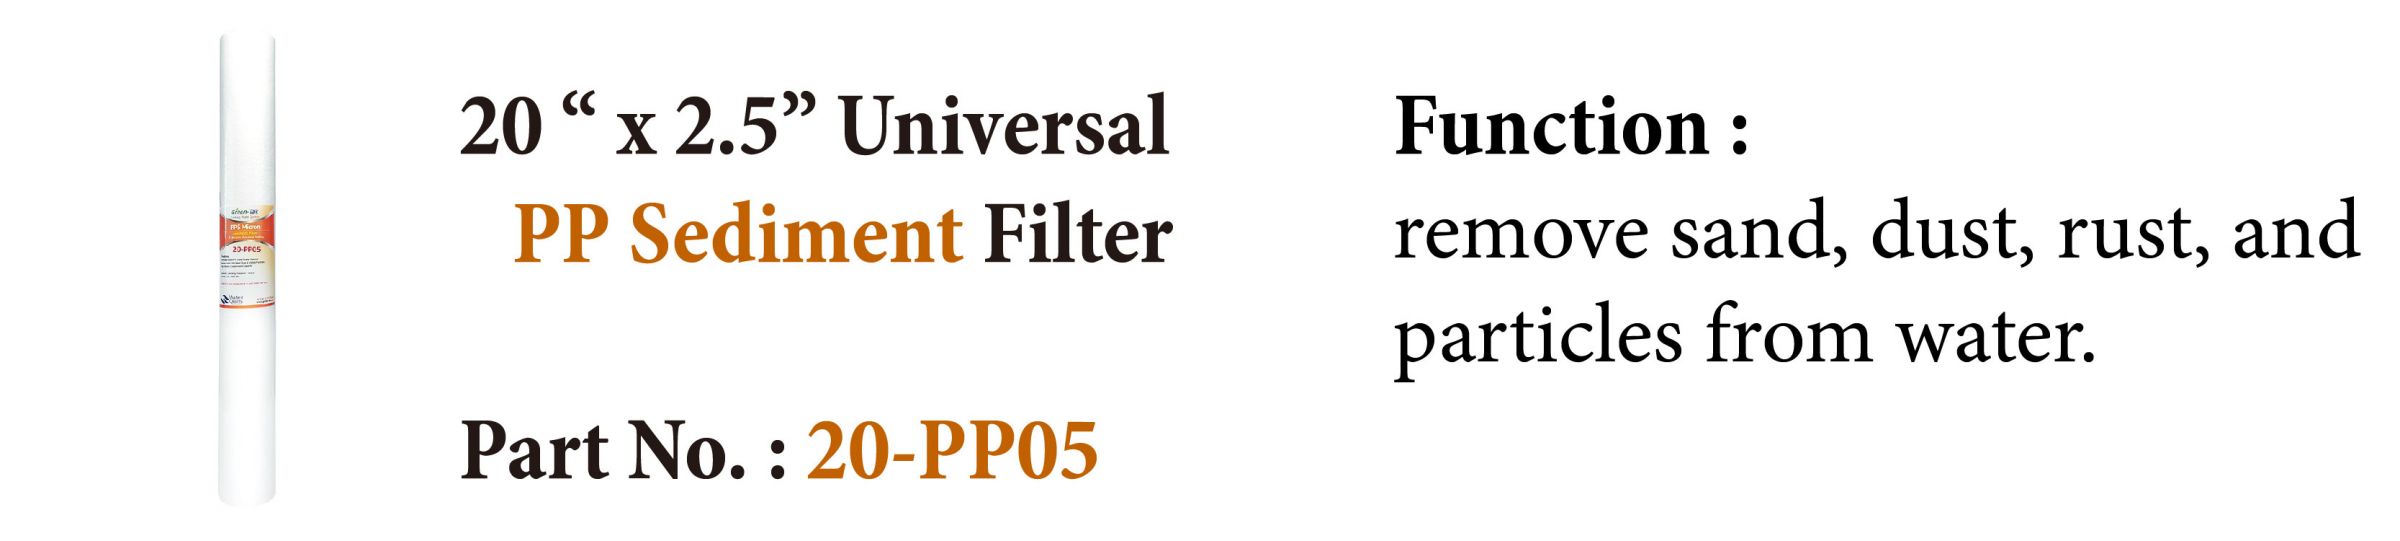 20 inch Universal PP Sediment Filter